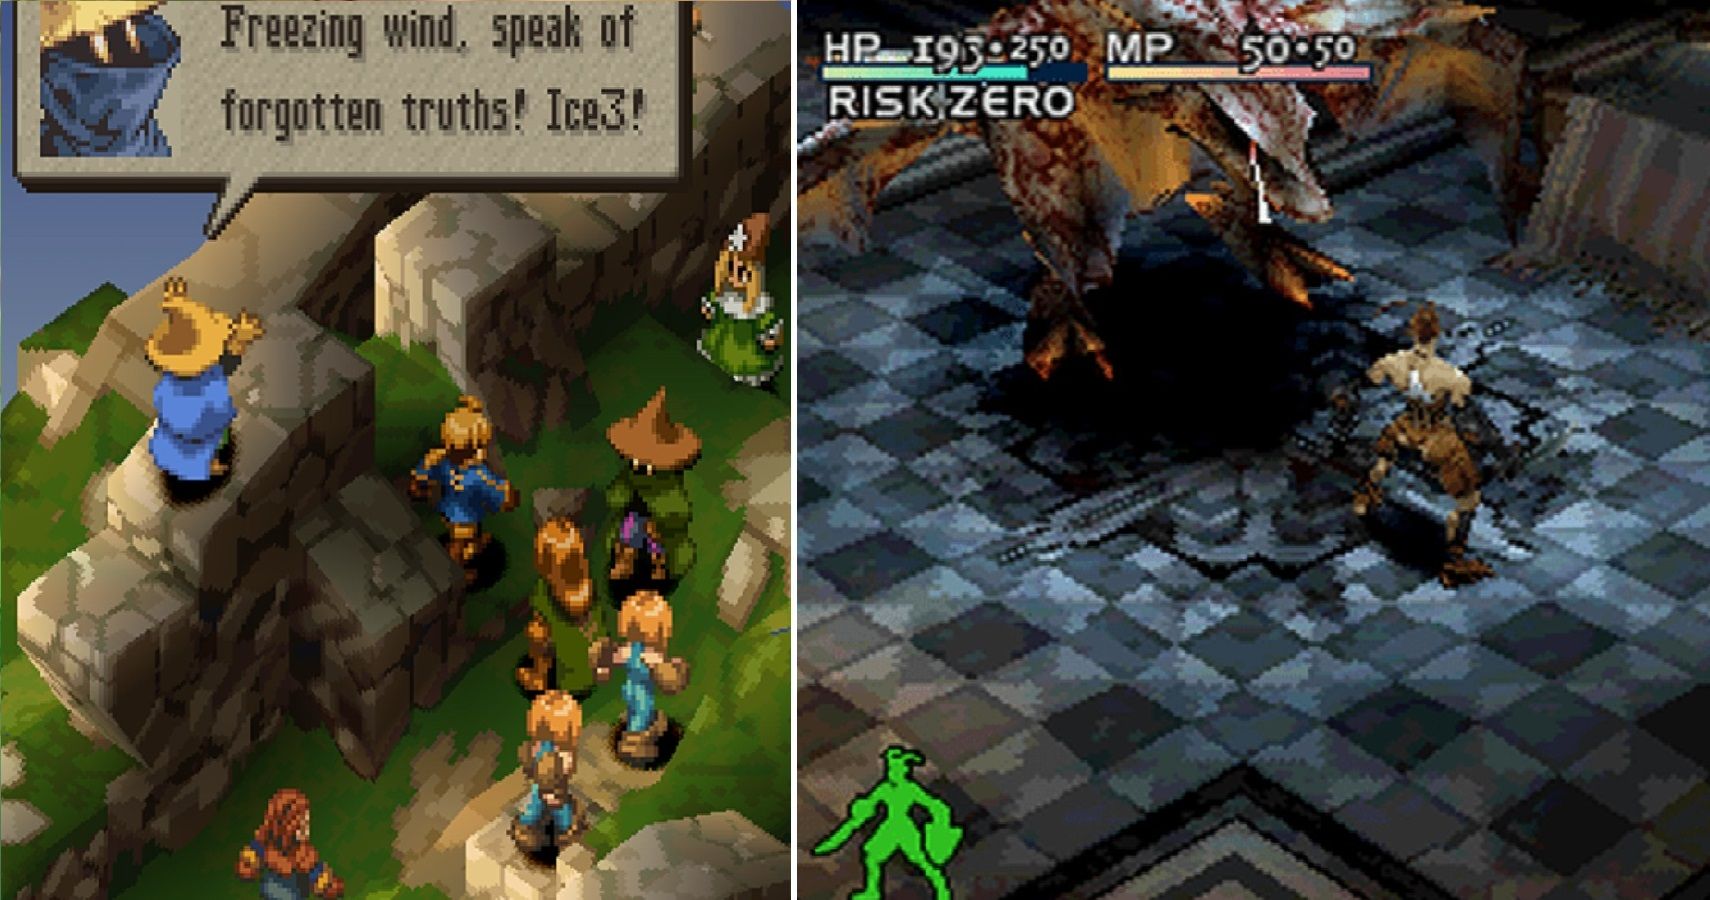 Screenshots from Final Fantasy Tactics and Vagrant Story